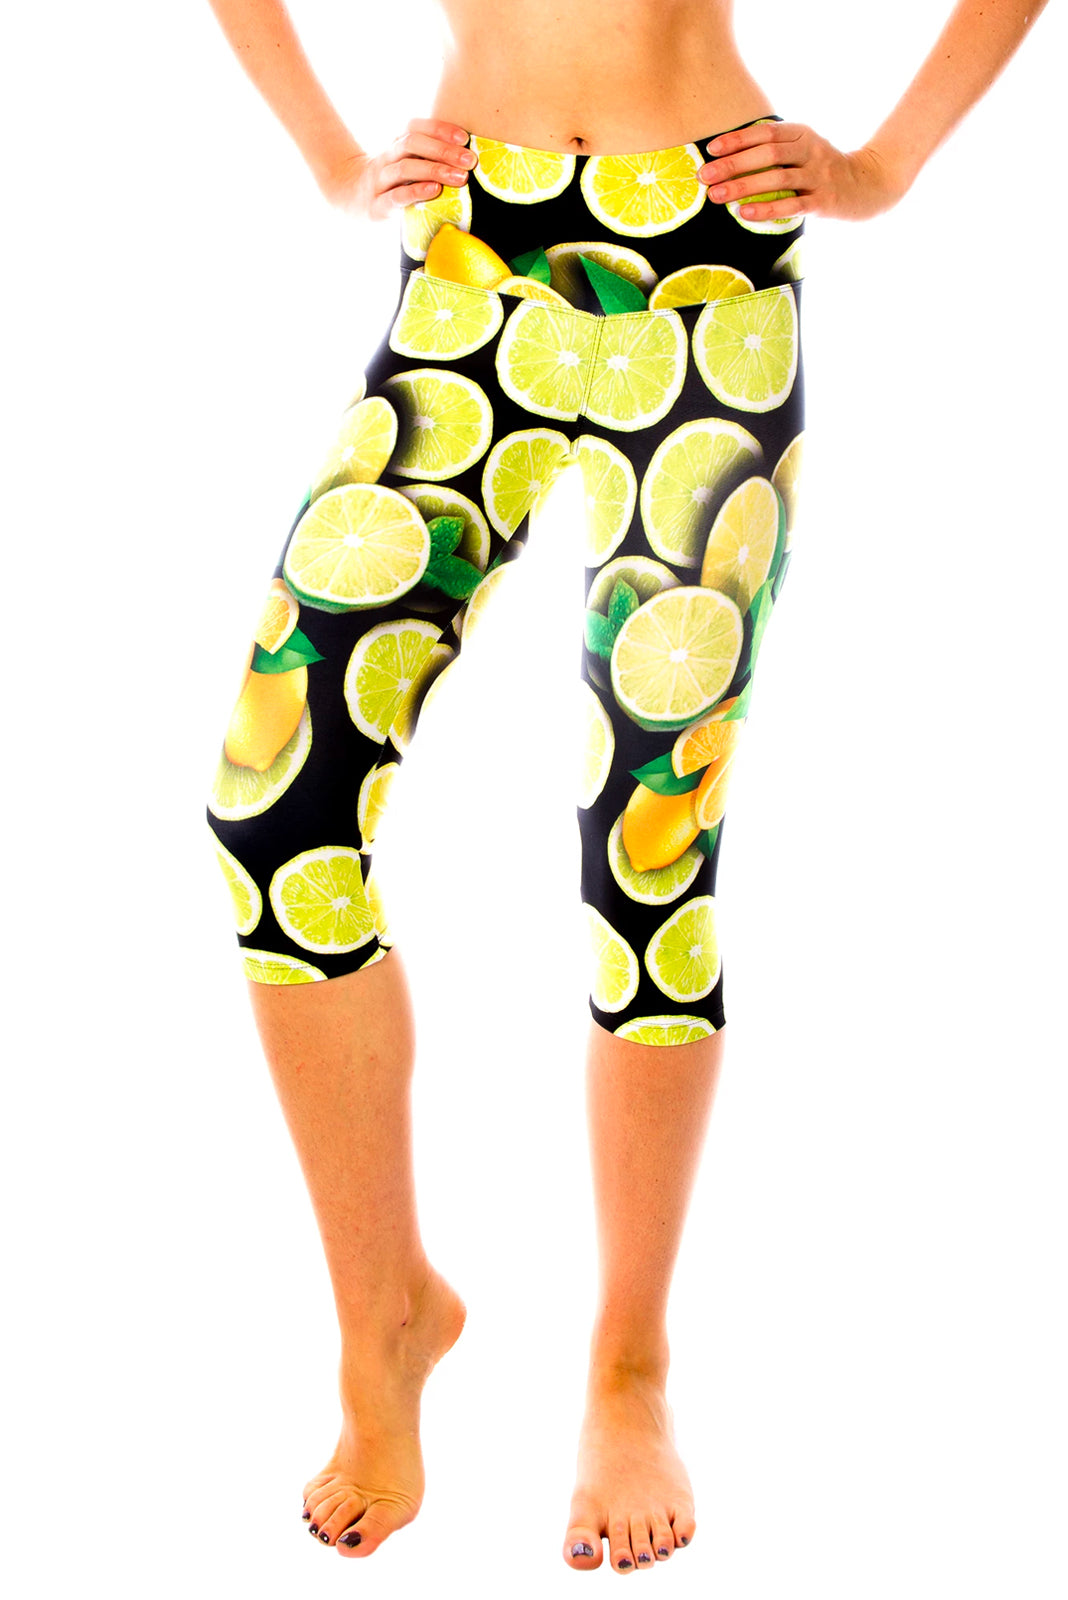 Lemon Tropic Fruits Printed Yoga Leggings for Women High Waist